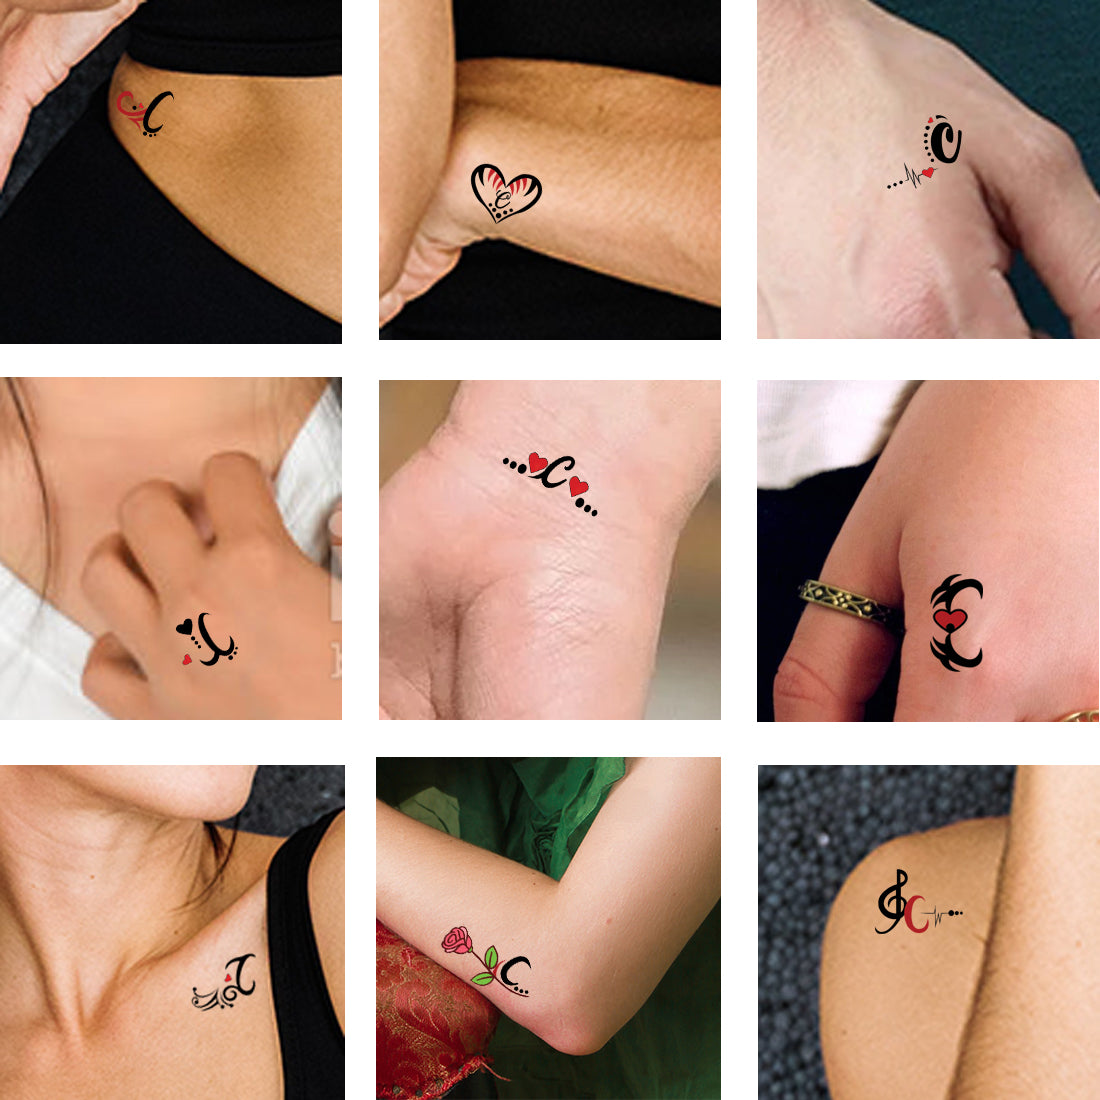 v tattoo  v letter tattoo on hand with pen  v name tattoo designs   YouTube